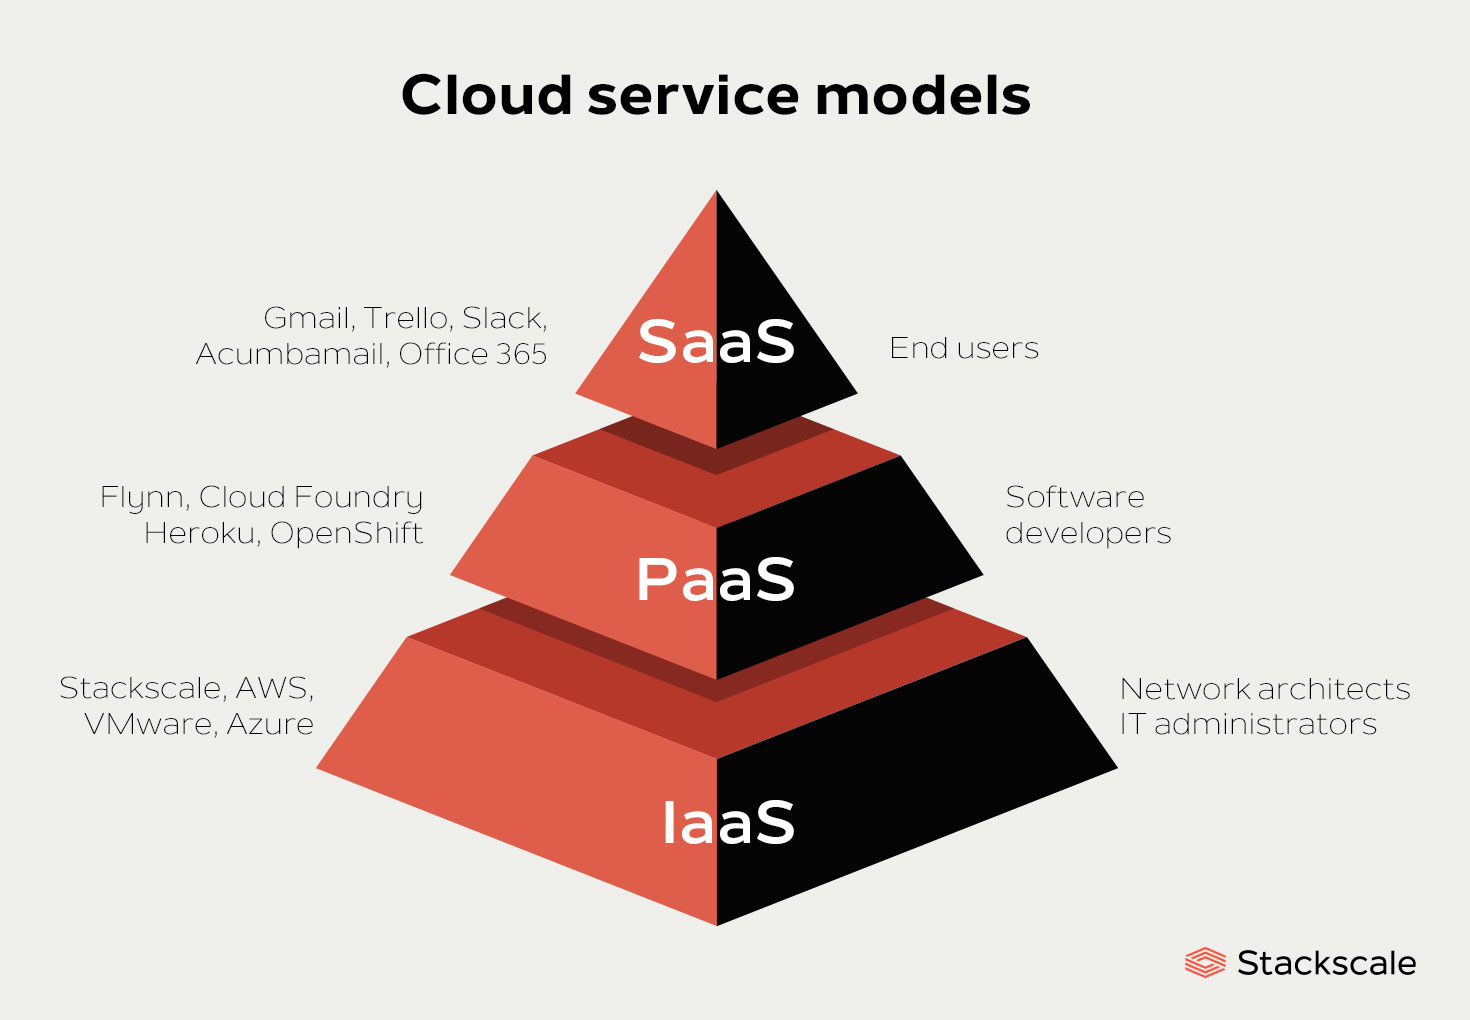 Cloud computing service models: SaaS, PaaS, IaaS Explained